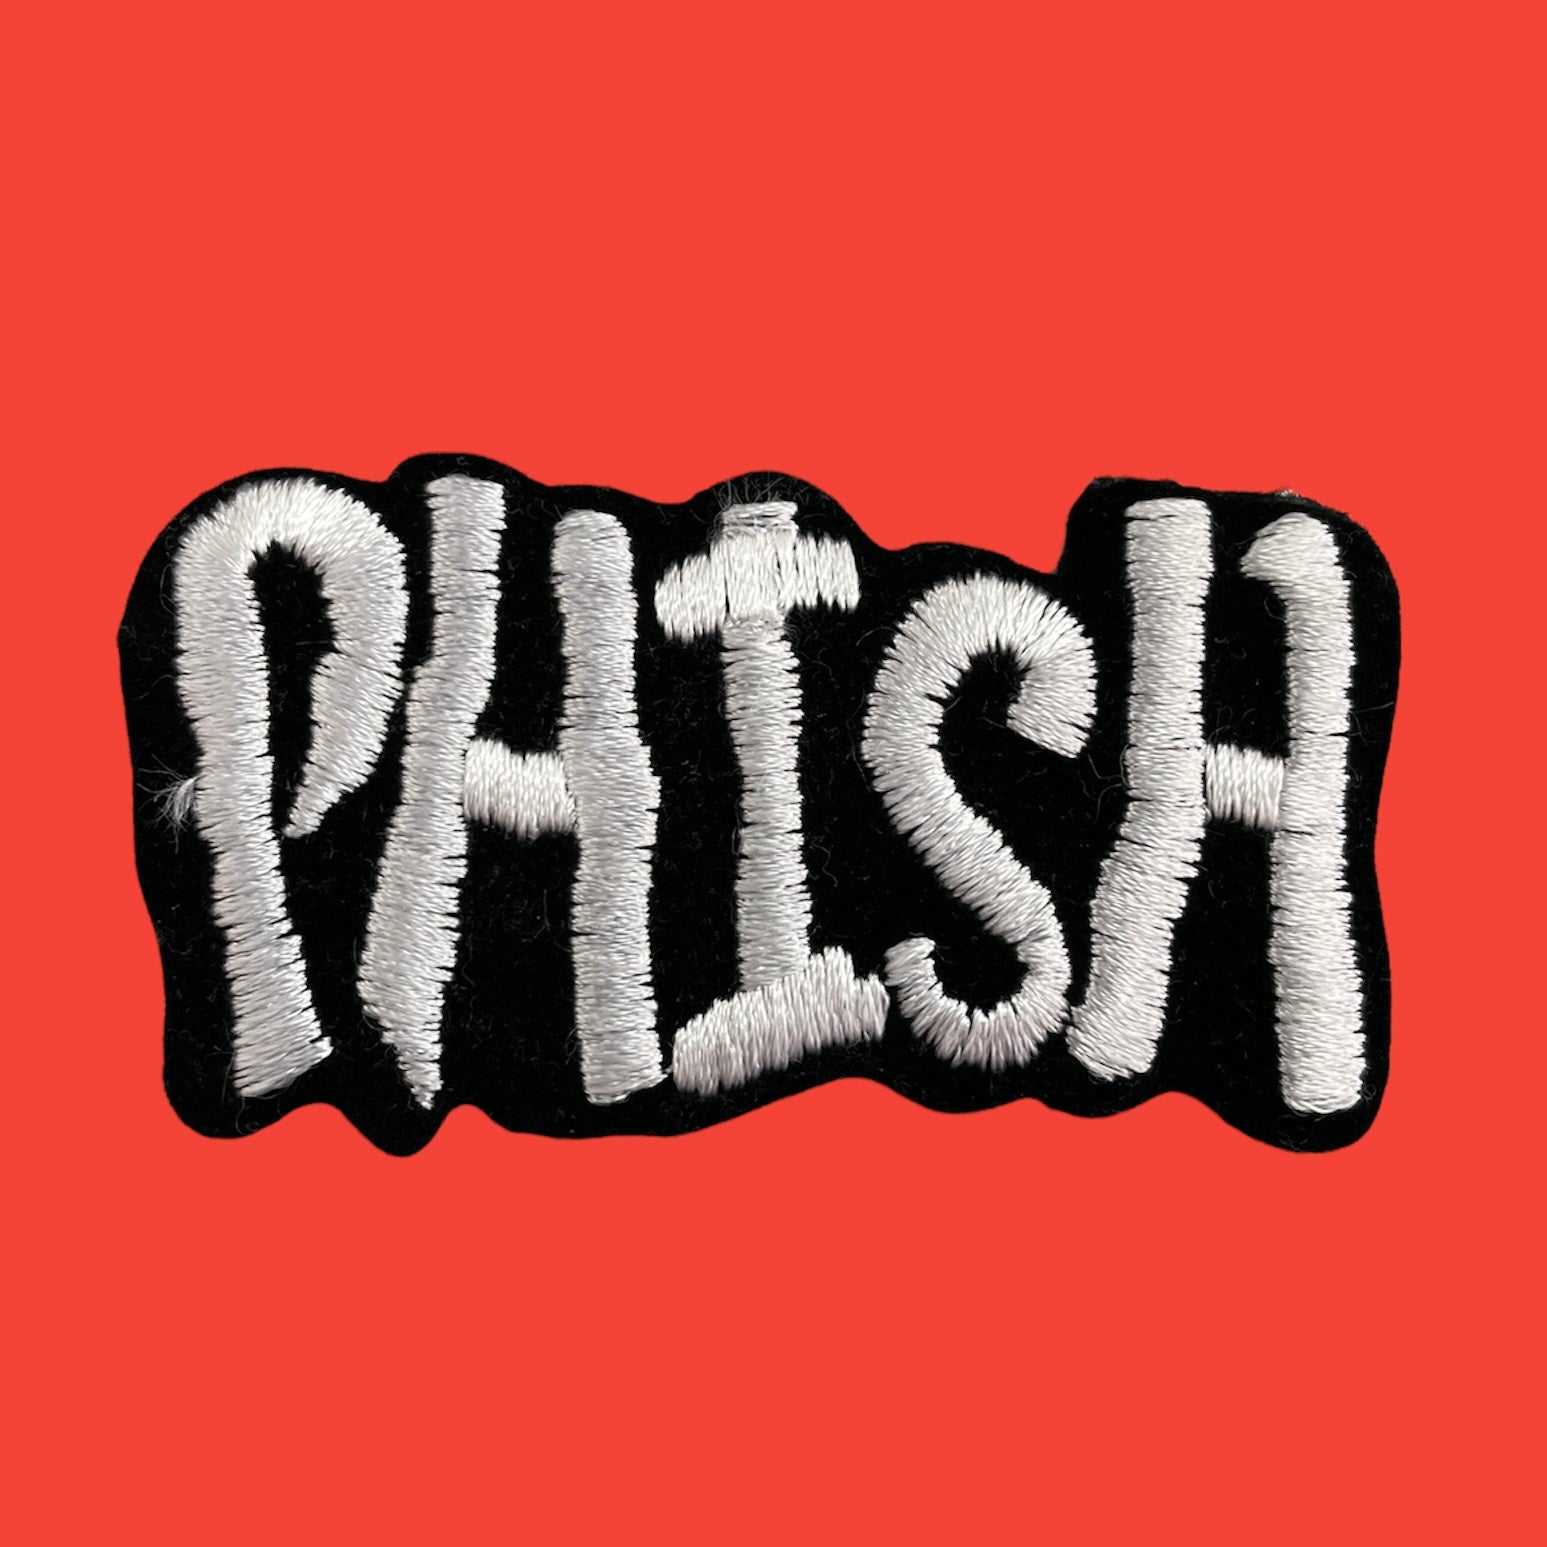 Phish Patch